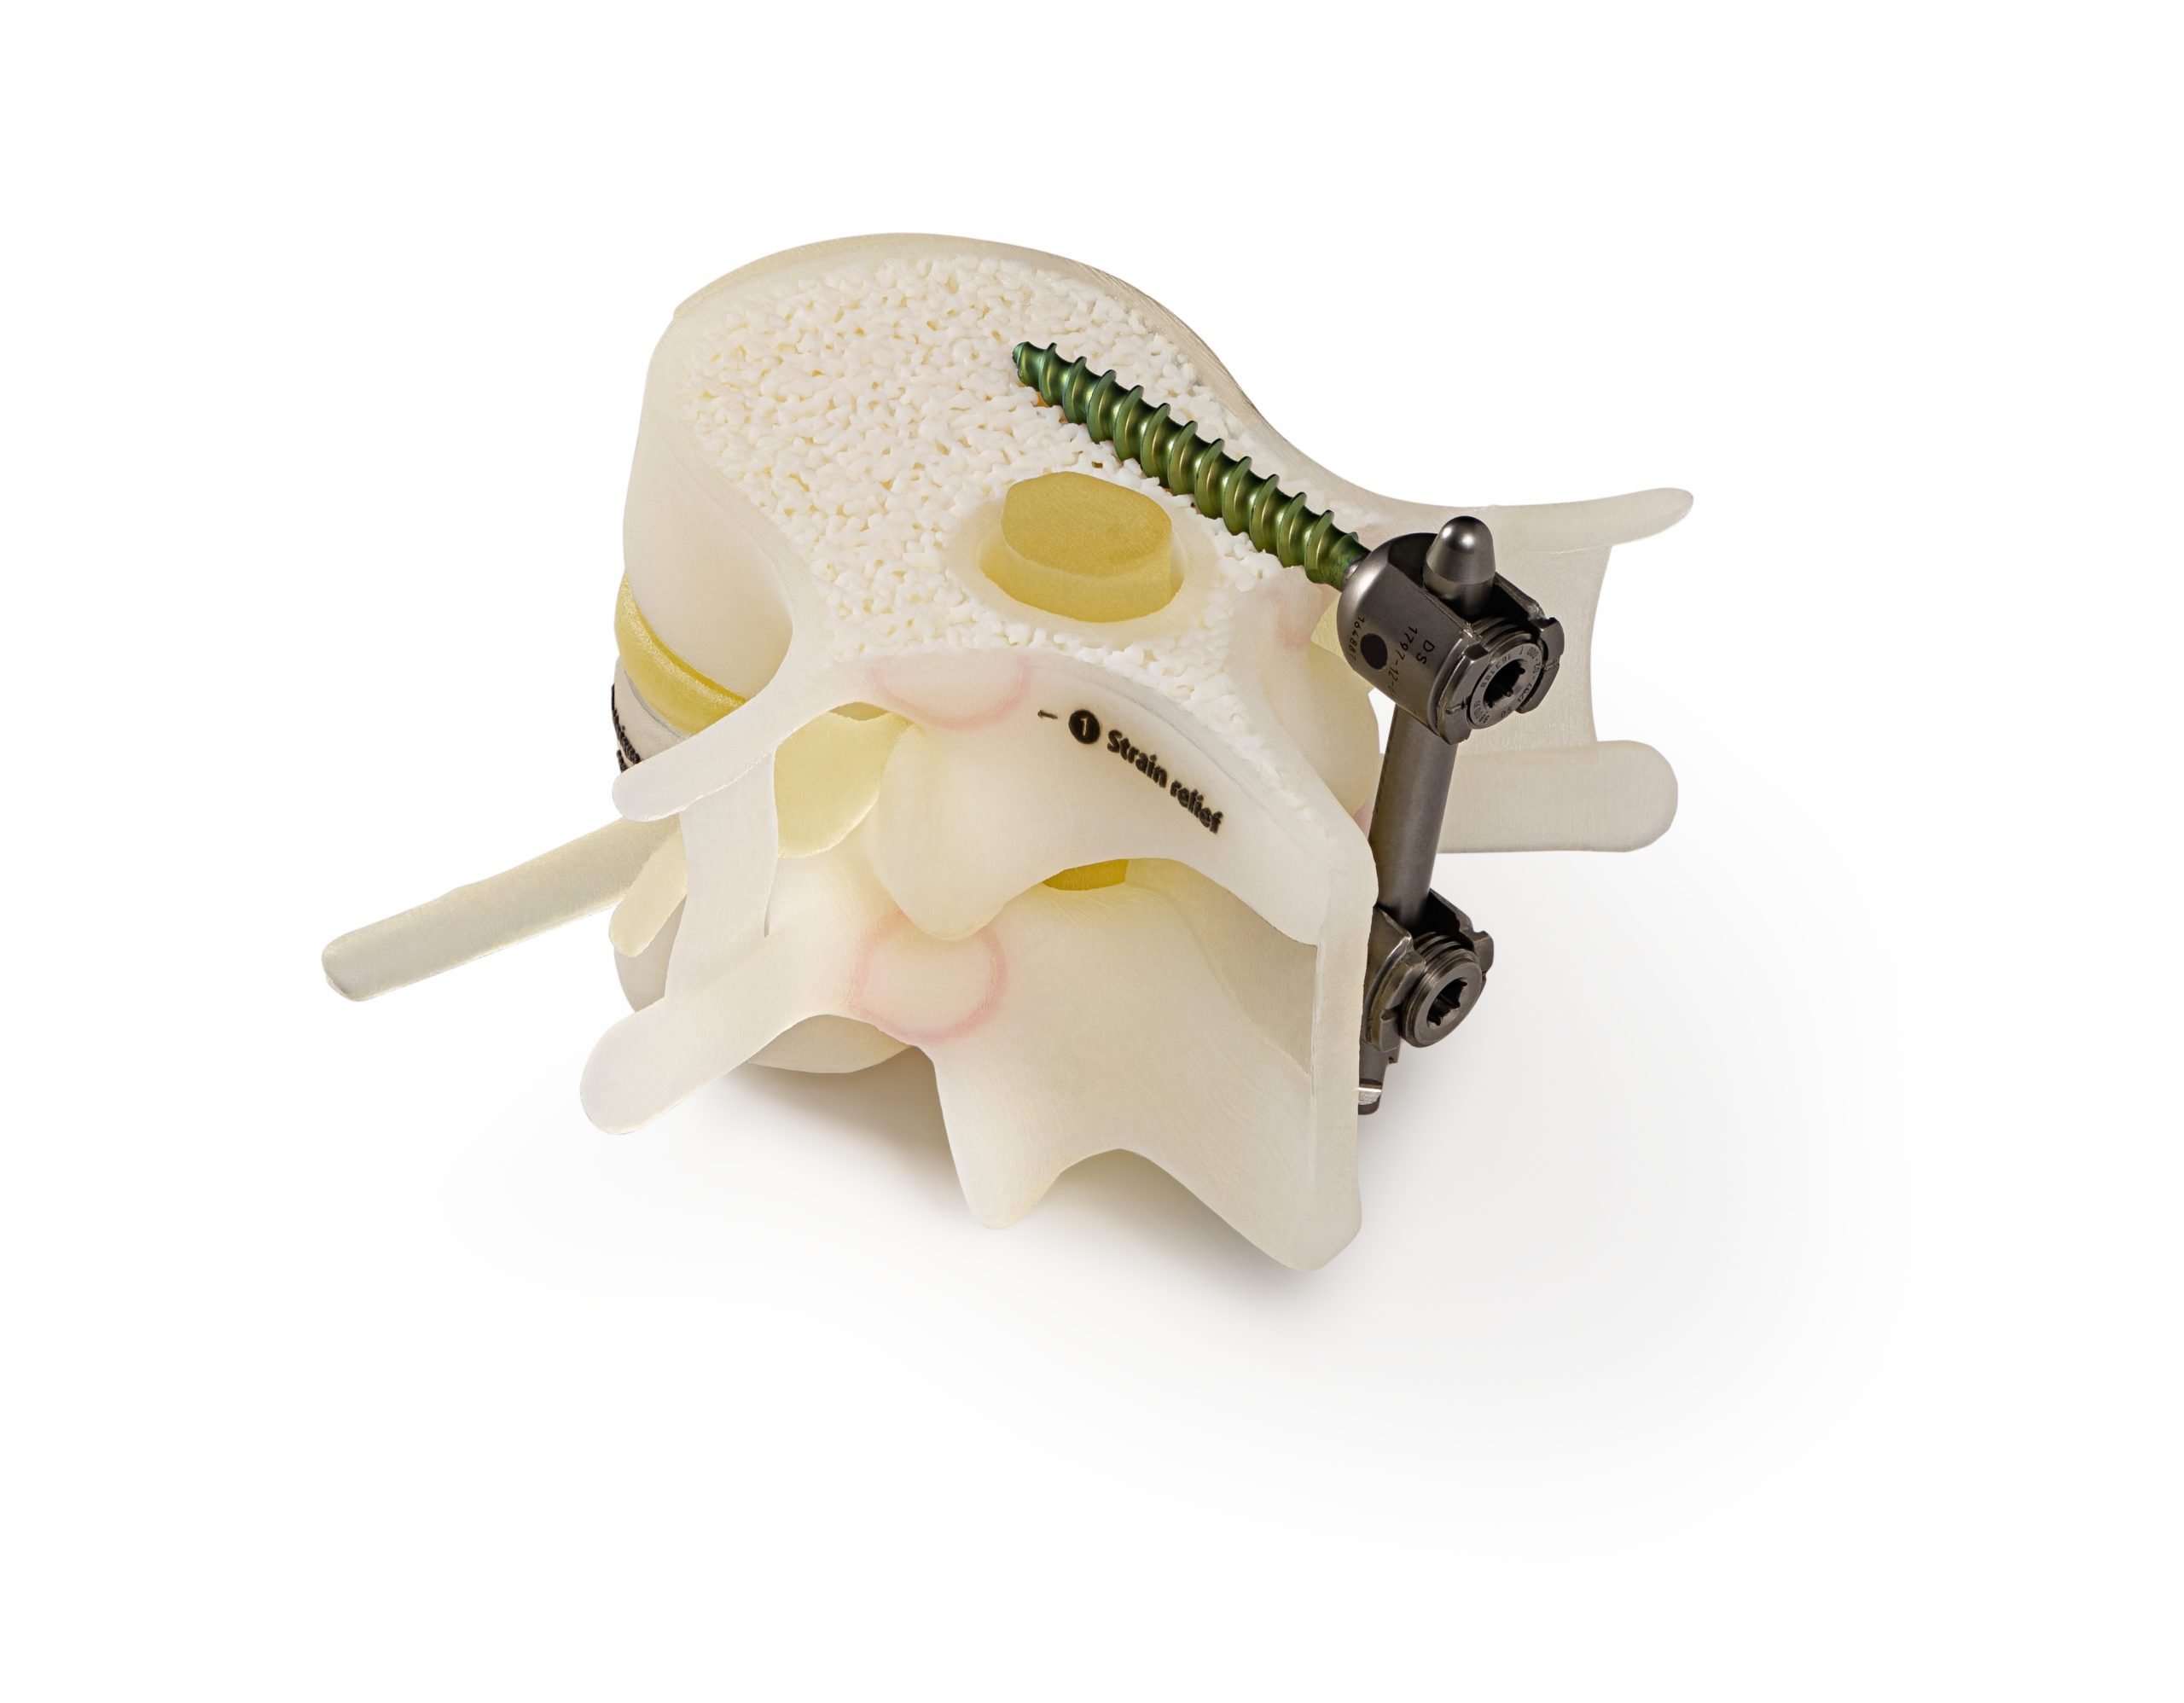 Spinal pedicel screw insertion 3D printed with Stratasys J750 Digital.